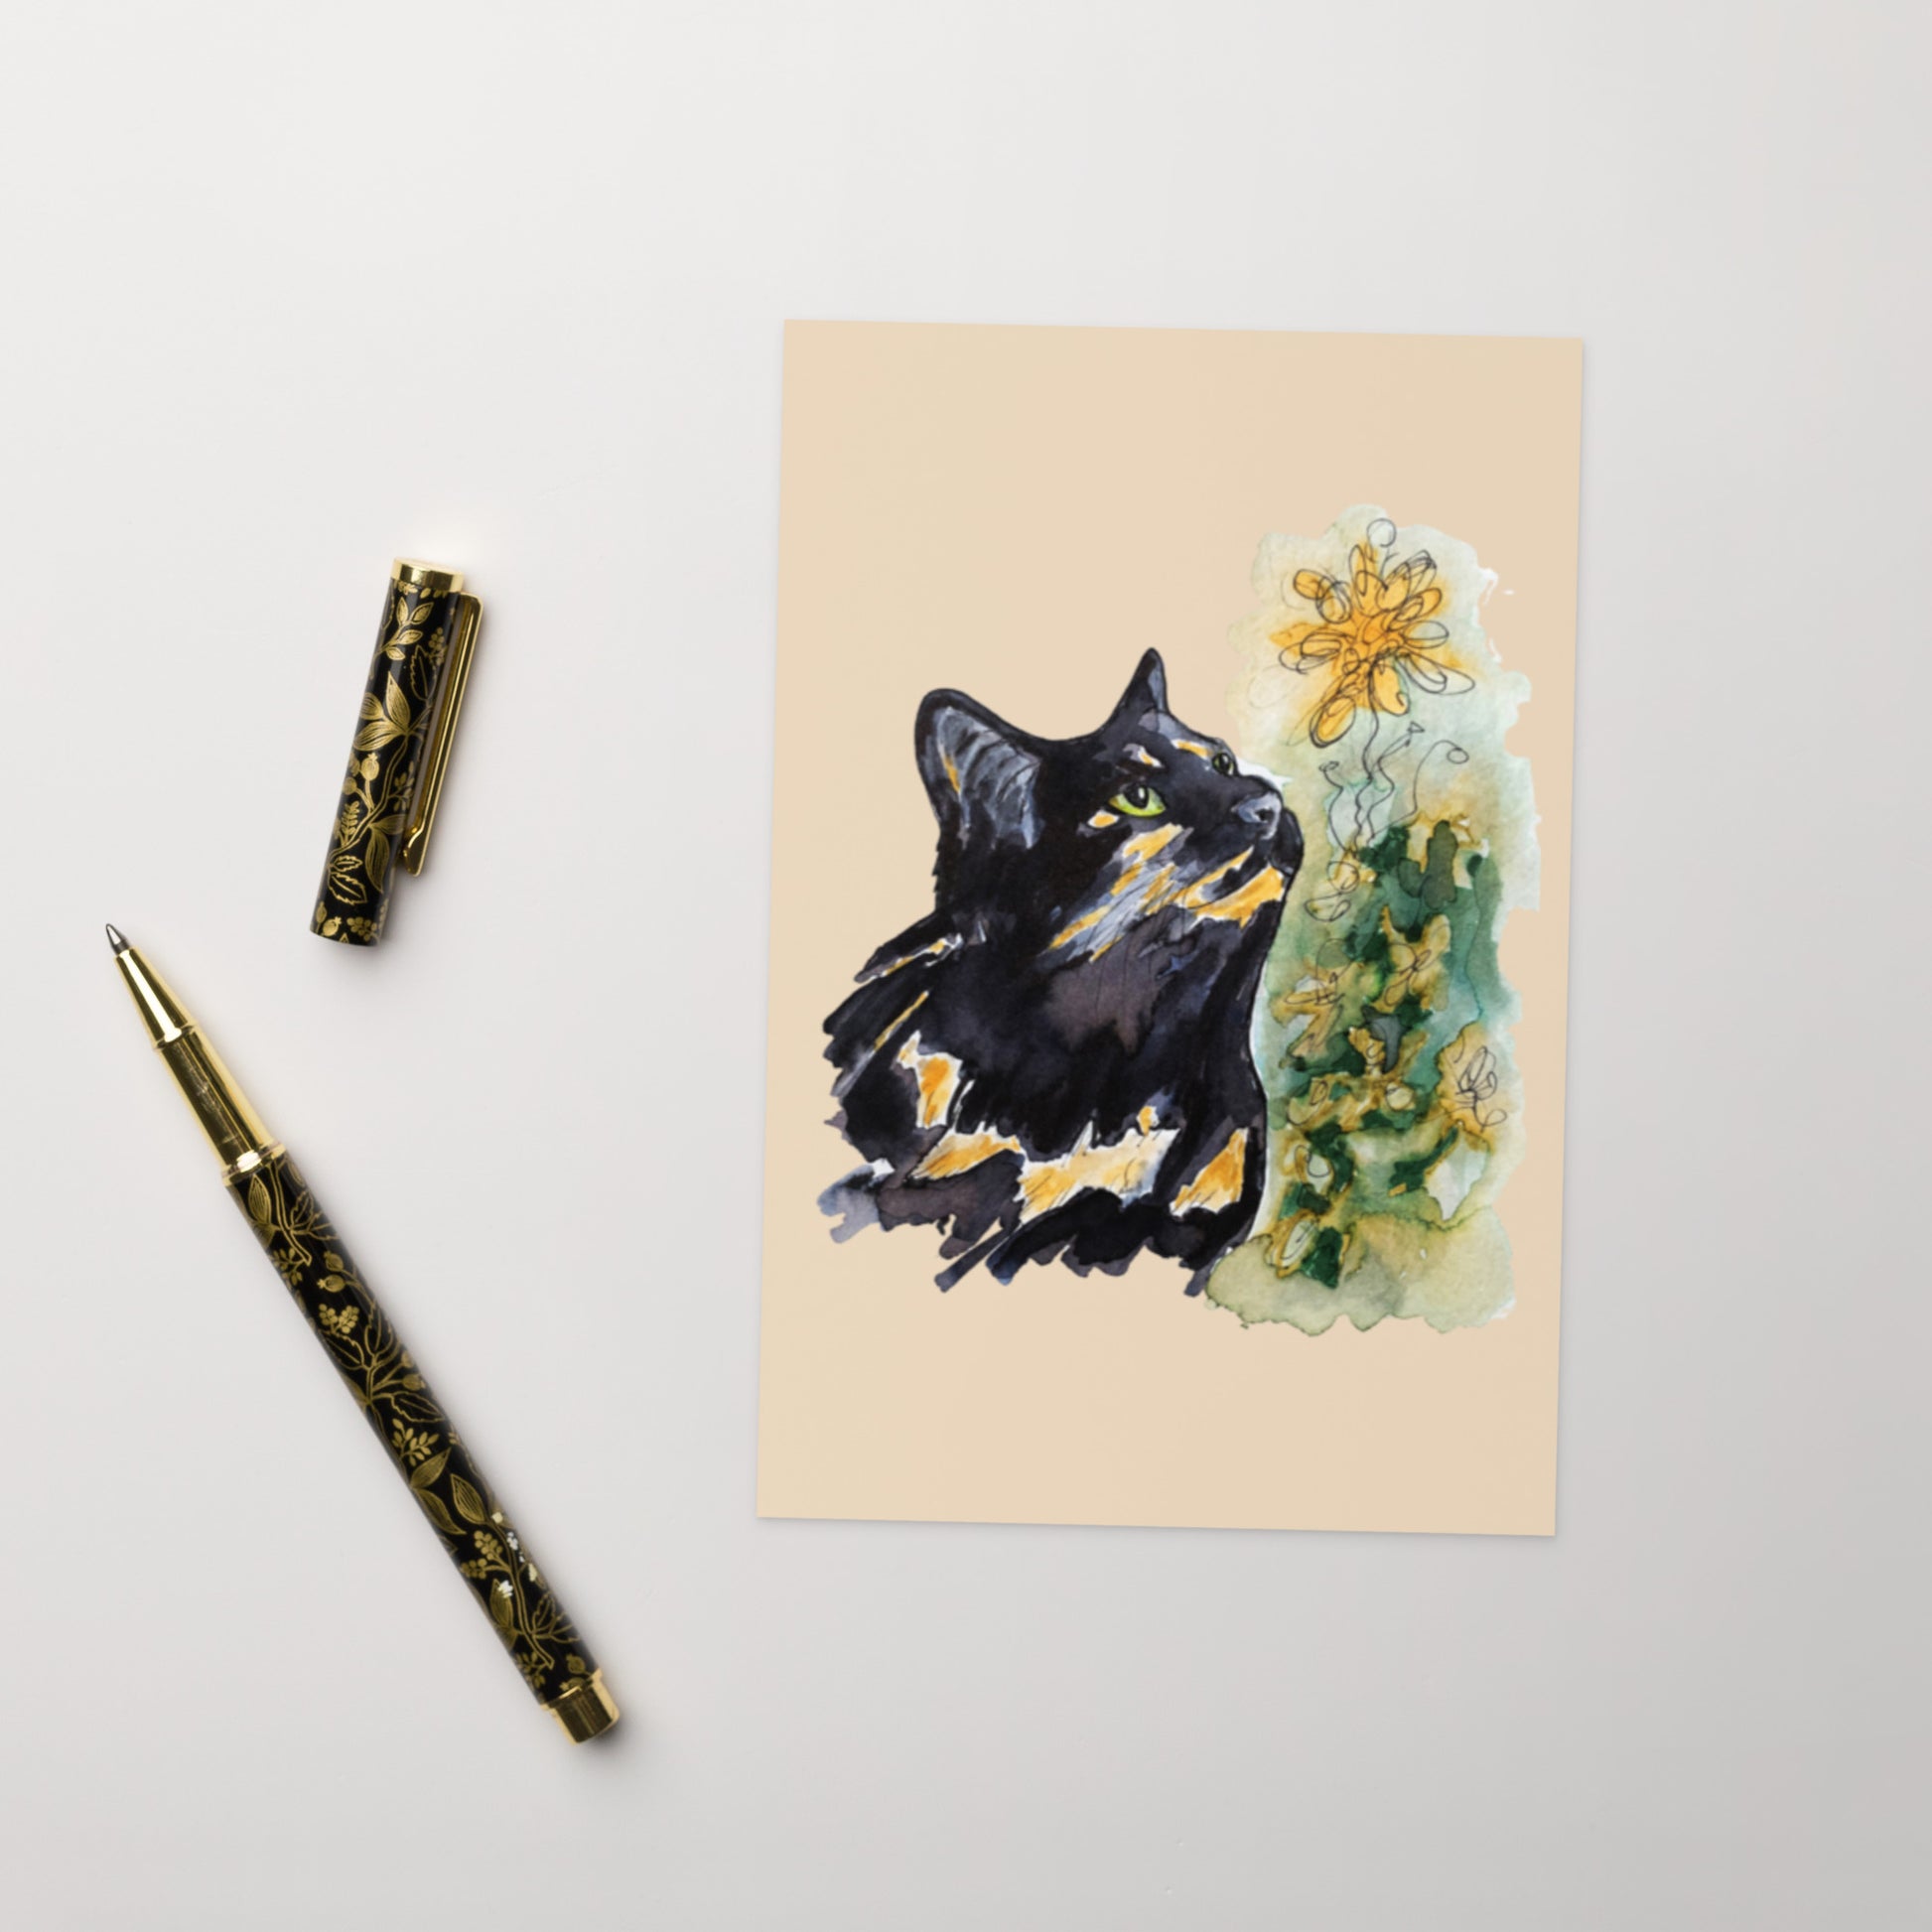 Cat Flower Greeting card - Art Love Decor